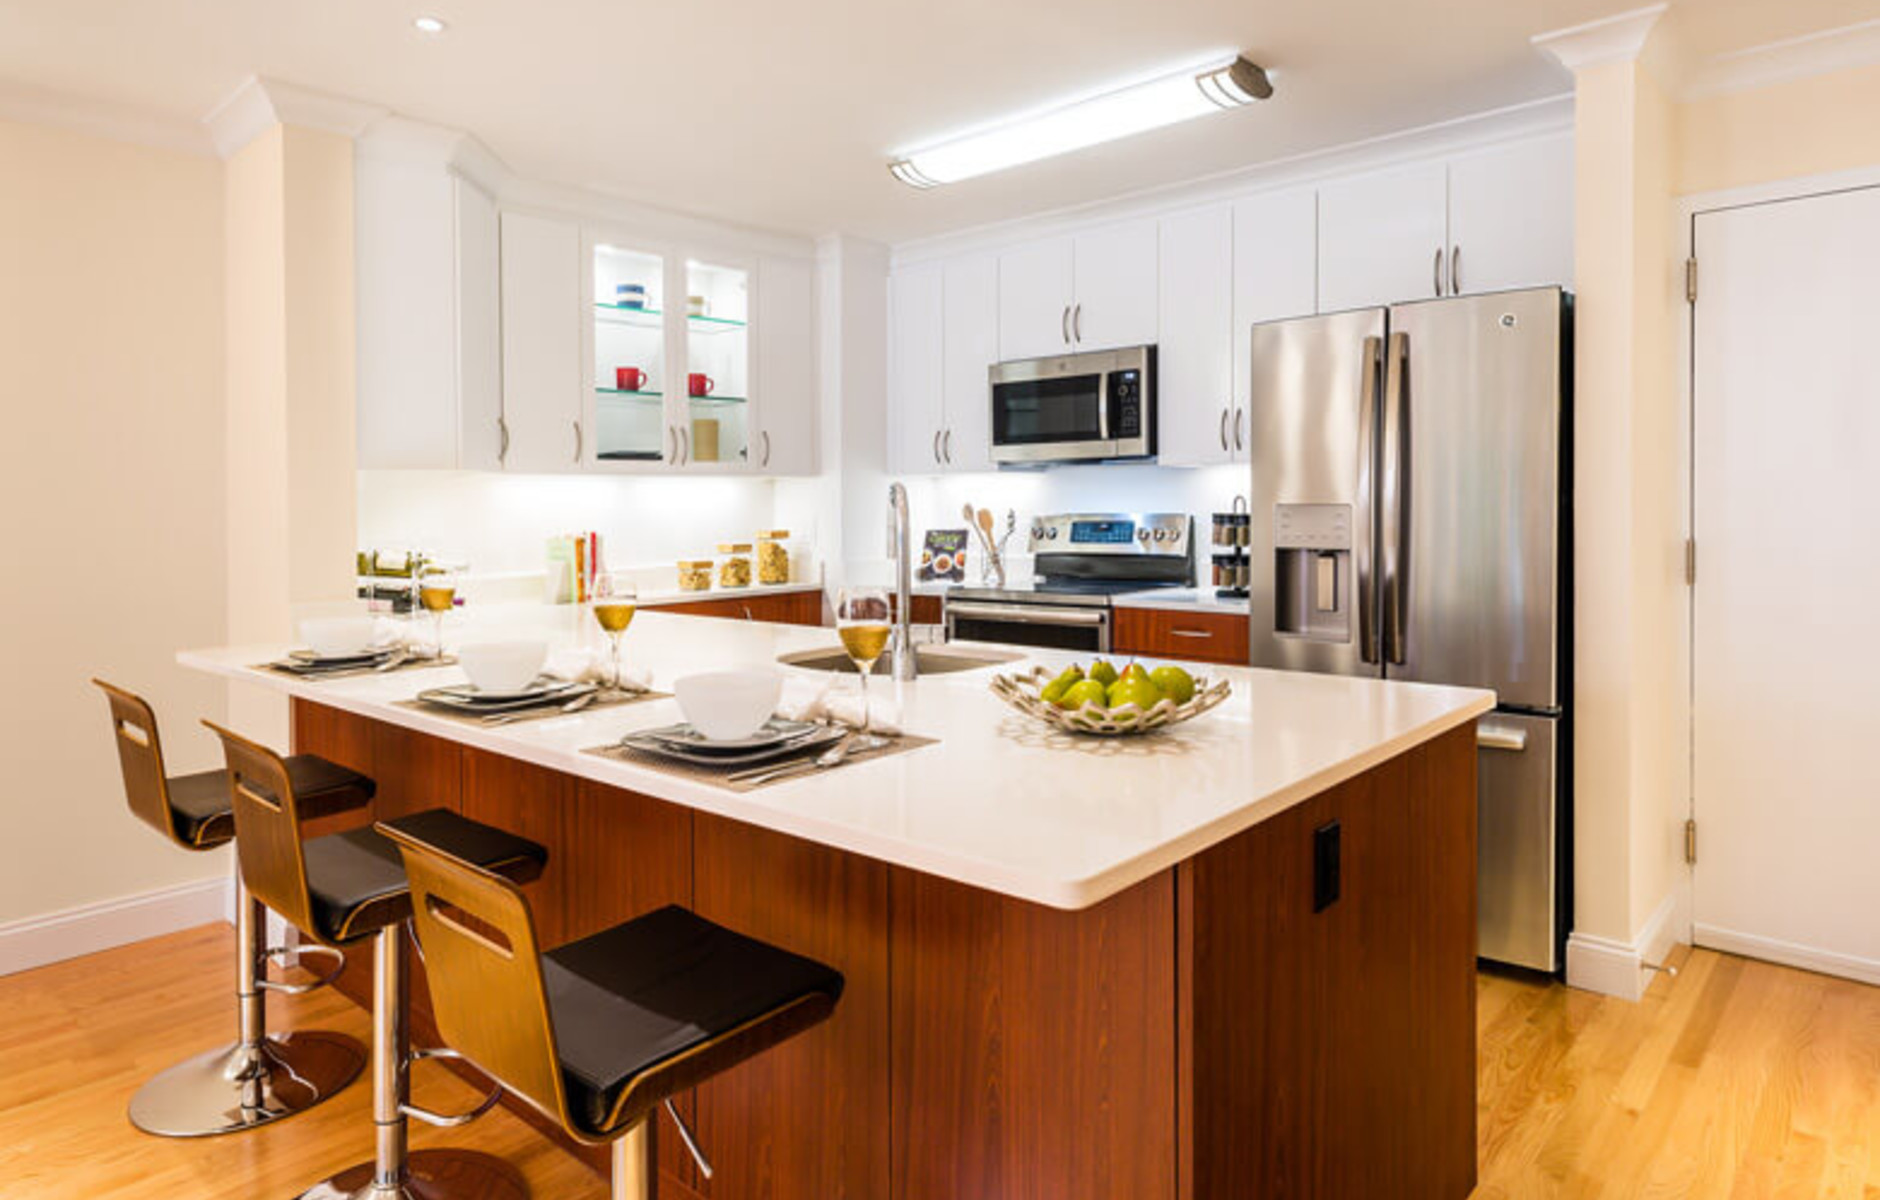 Newly renovated transitional style kitchen